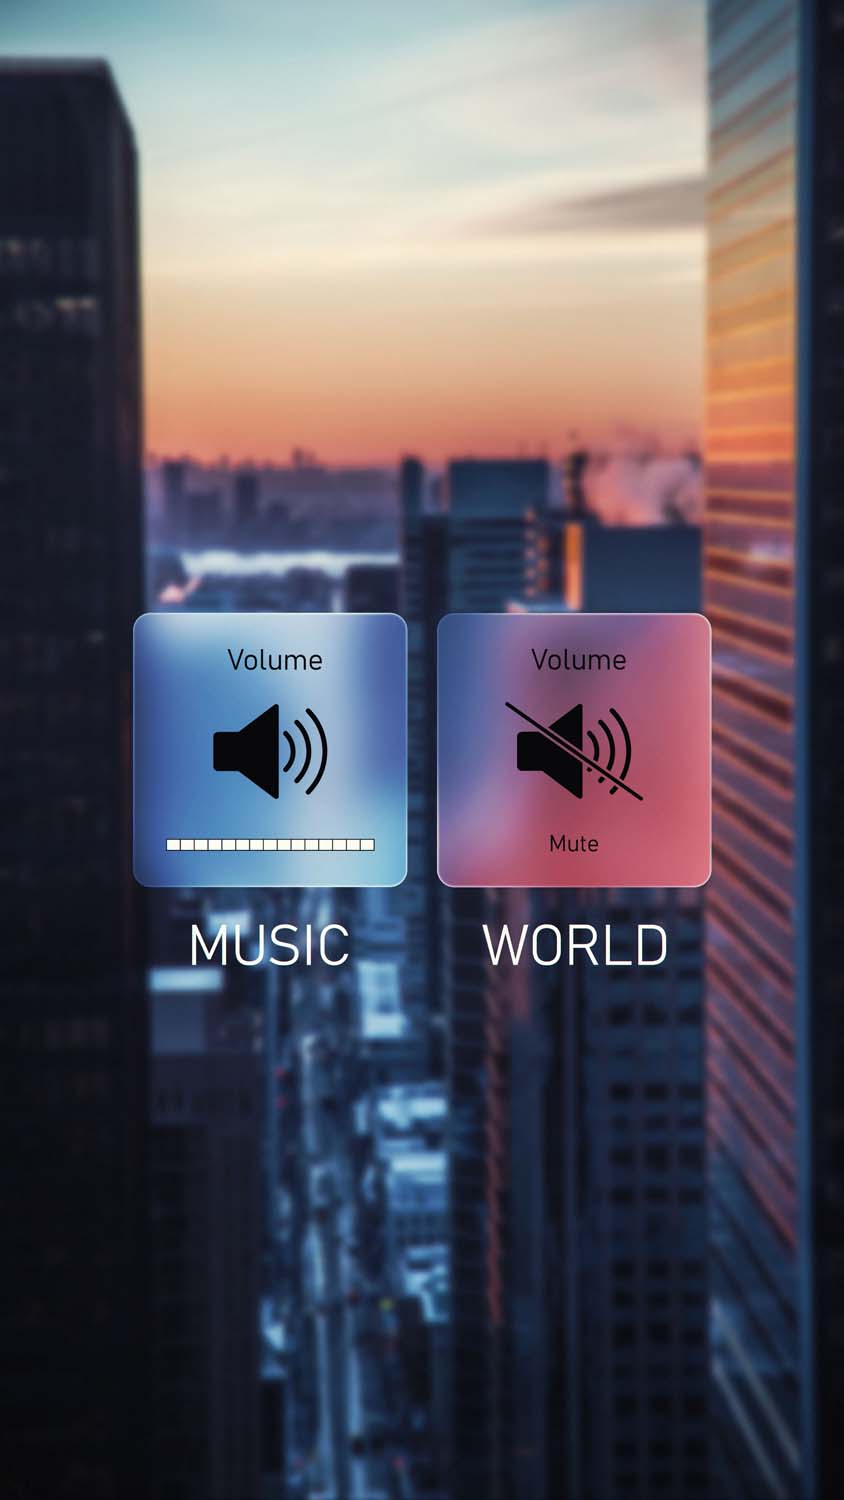 Music ON World OFF iPhone Wallpaper HD 1